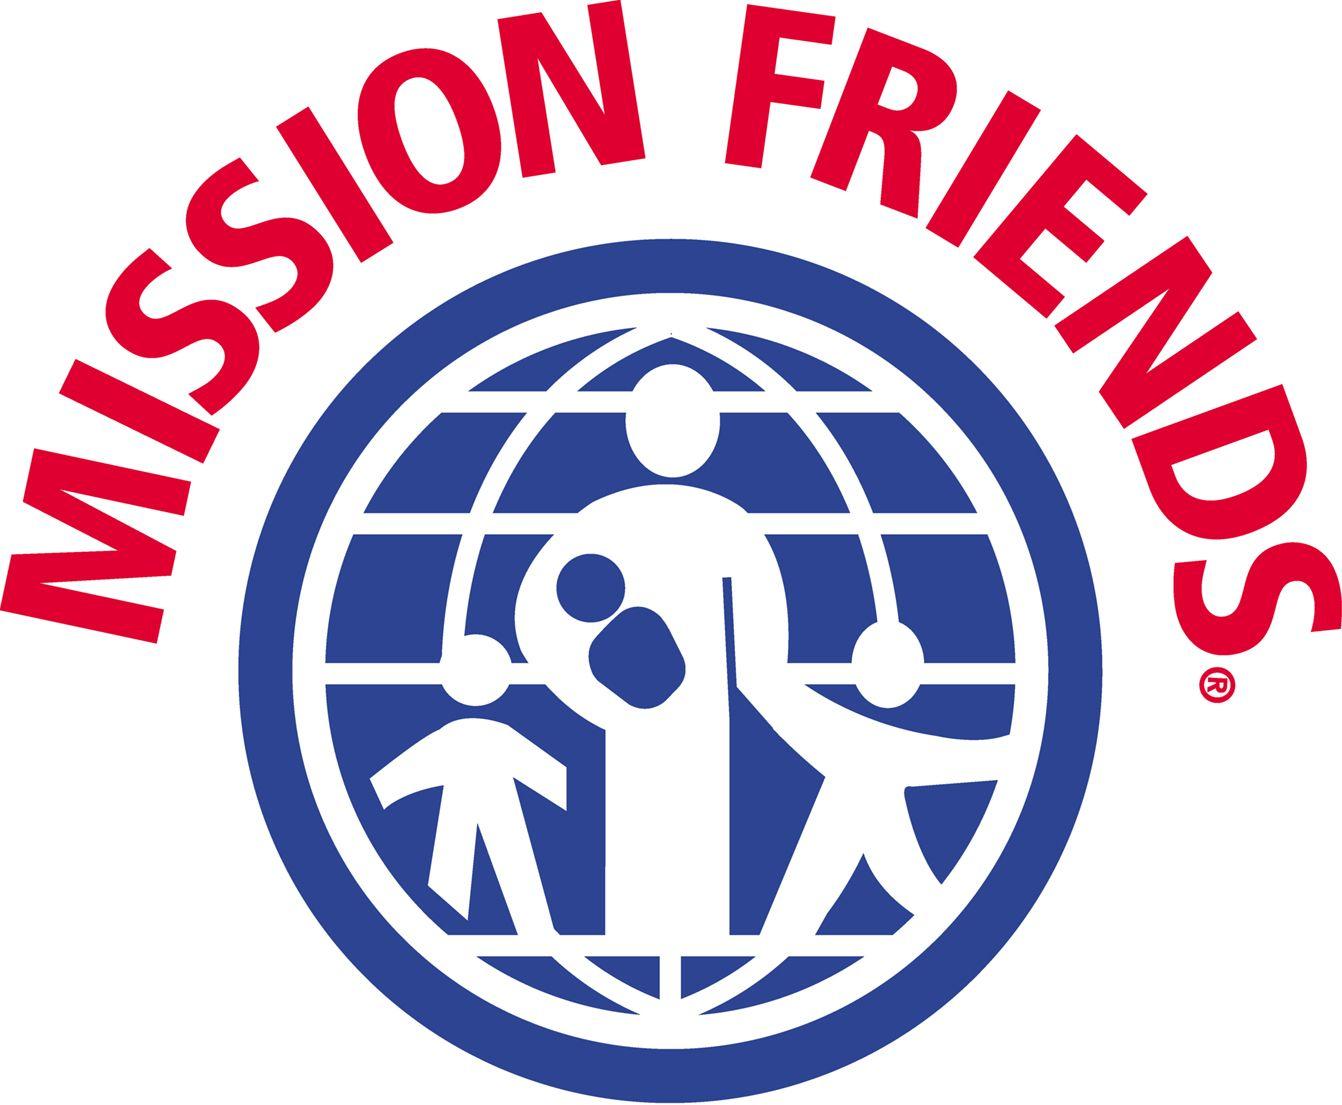 Acteens Logo - Mission Friends